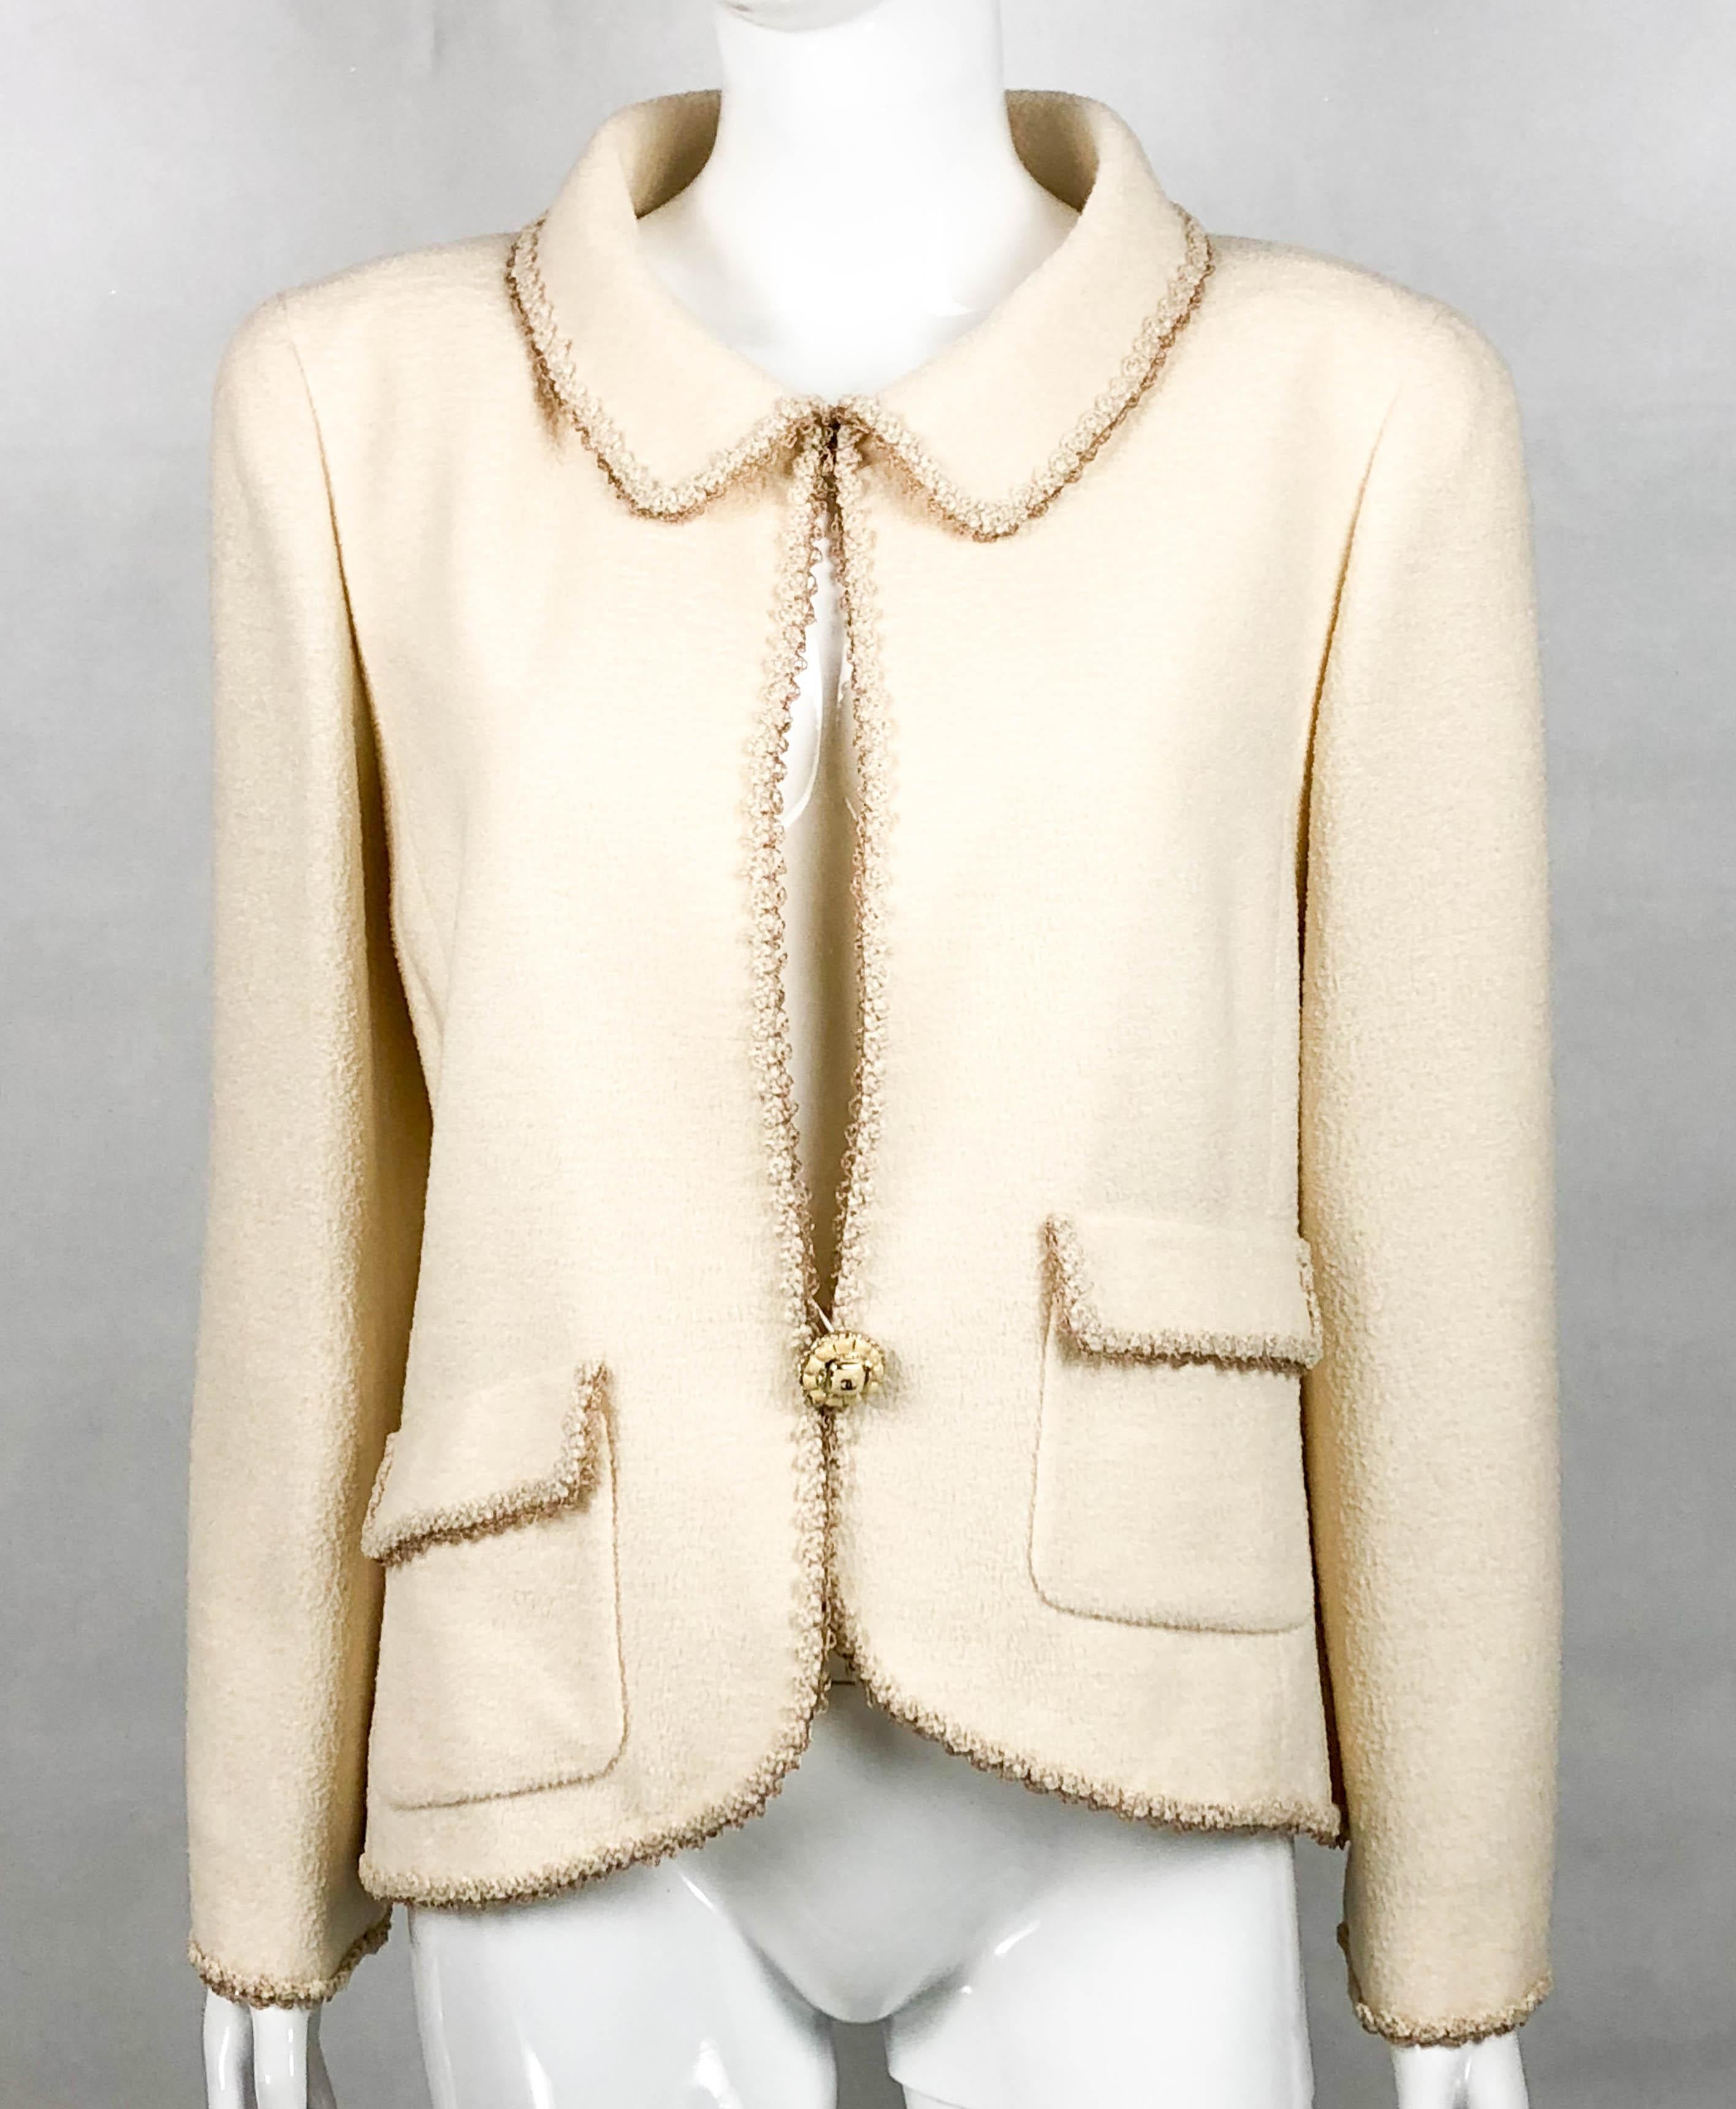 2010 Chanel Unworn Runway Look Cream Jacket With Gold Thread Trim For Sale 1